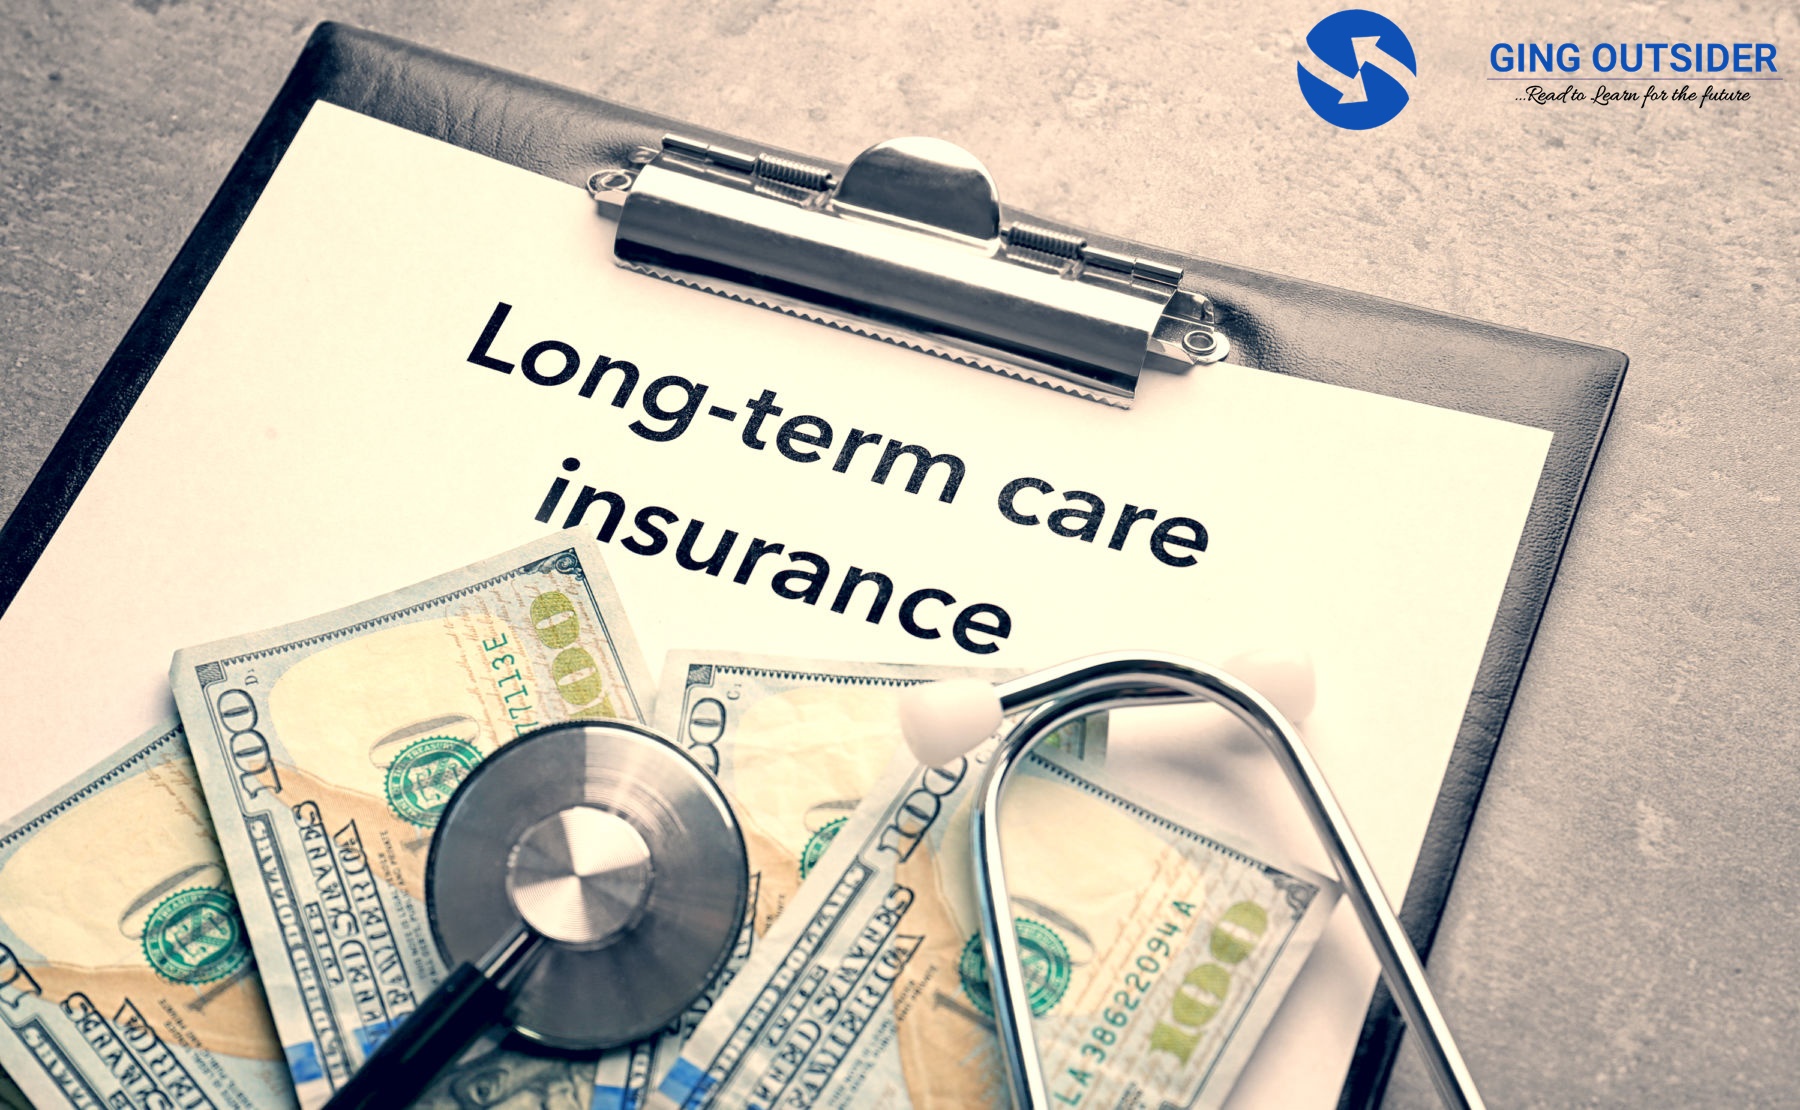 Long-term Insurance Care